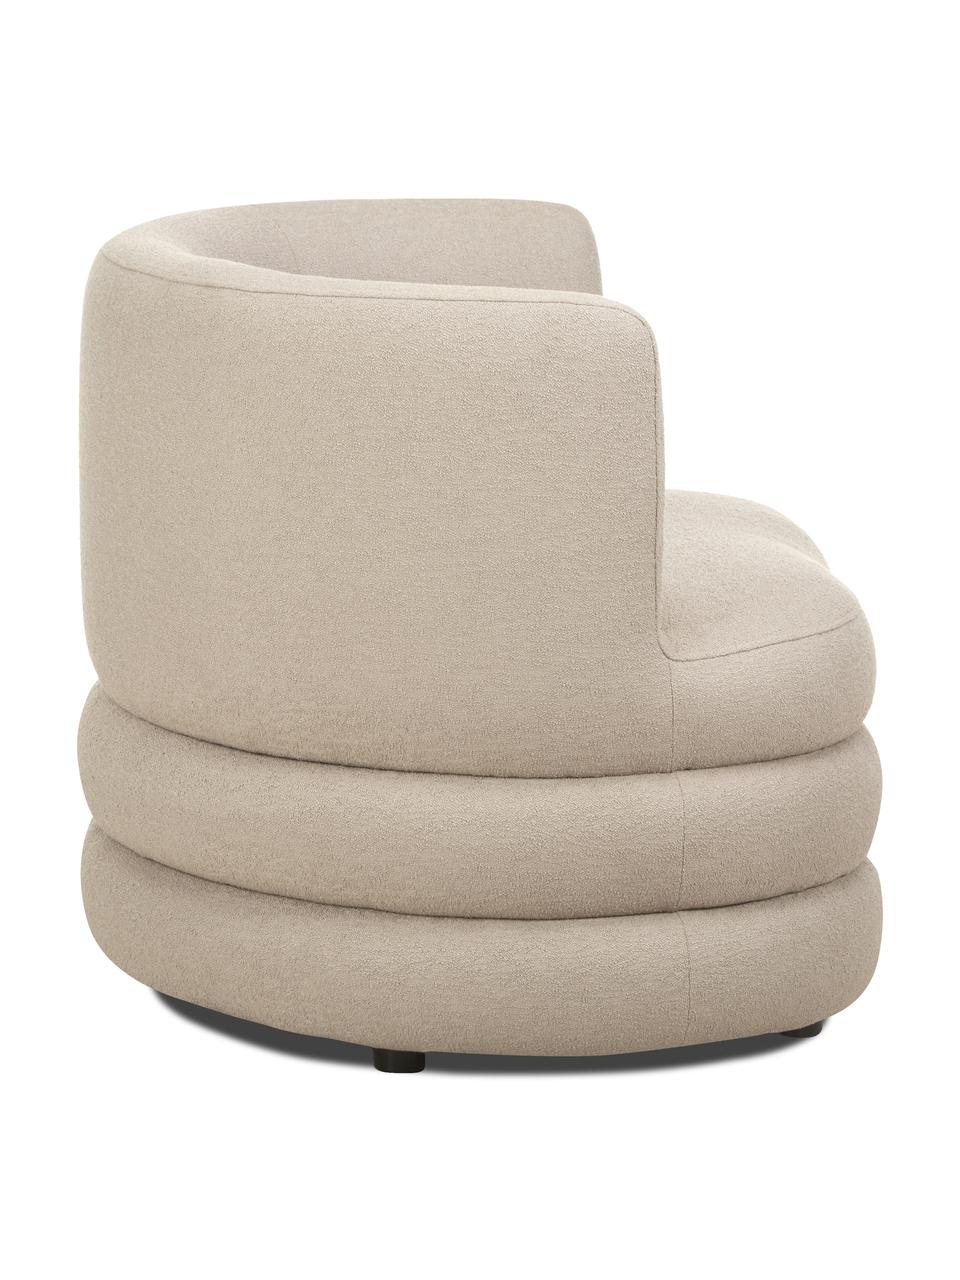 Designer bouclé fauteuil Solomon in lichtgrijs, Bekleding: 100% polyester, Frame: massief sparrenhout, berk, Poten: kunststof, Bouclé lichtgrijs, B 95 x D 80 cm